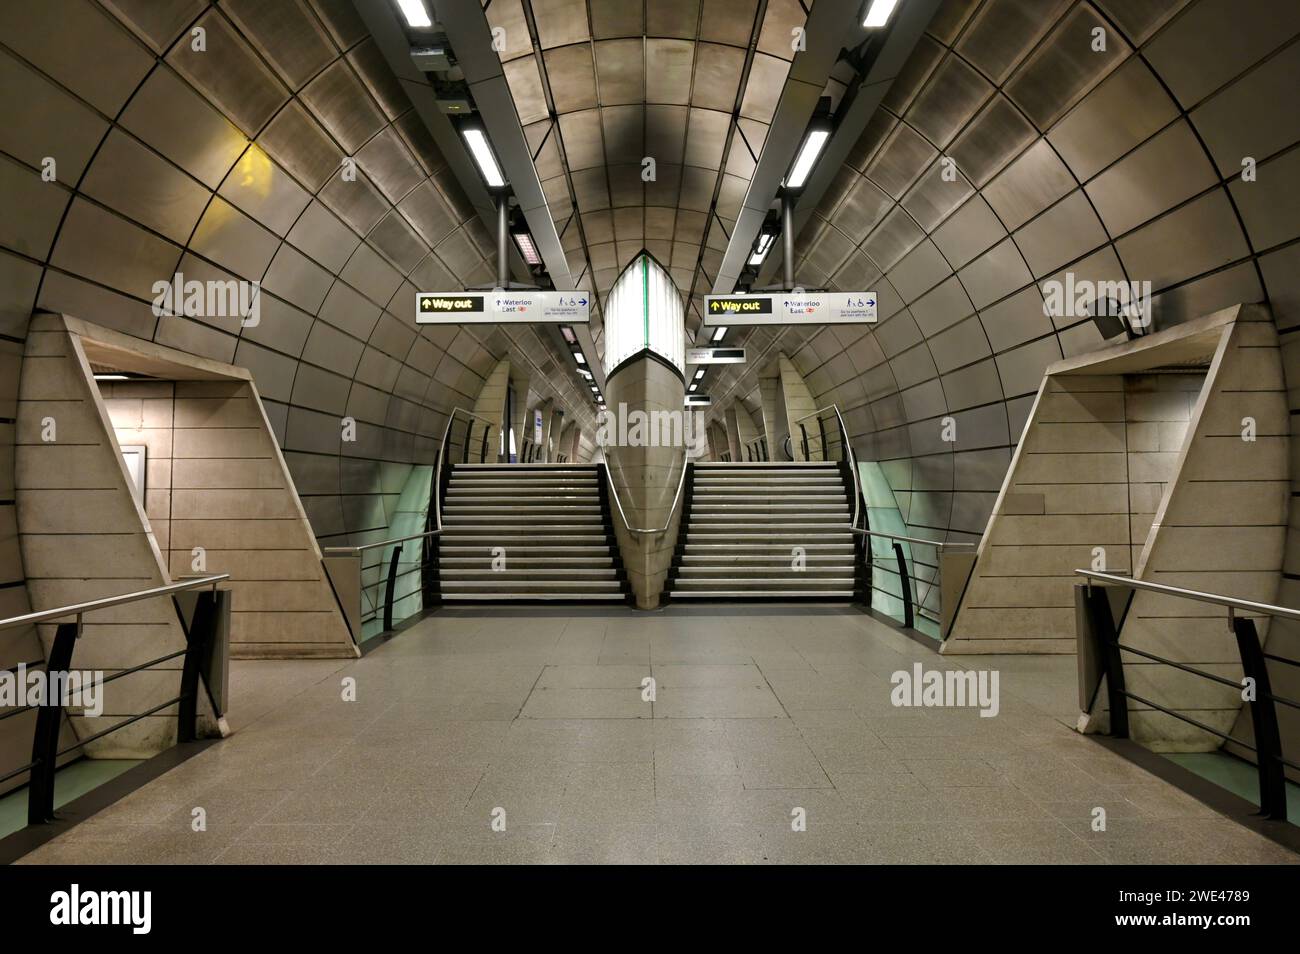 Southwark u-Bahnstation Stockfoto